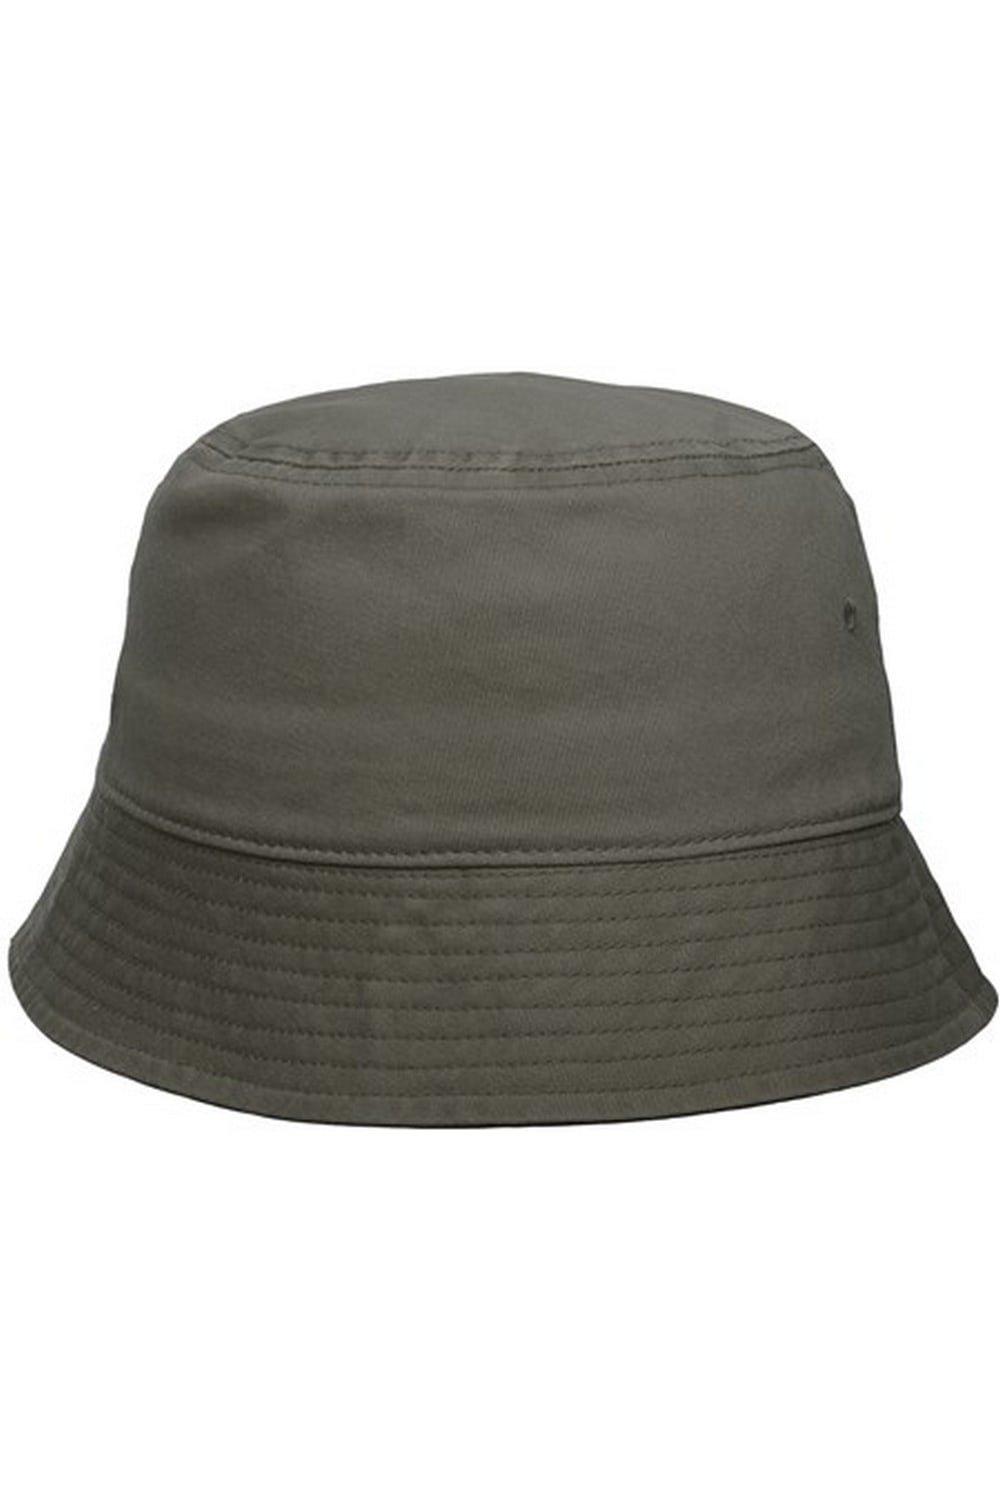 Atlantis Powell Bucket Hat|dark grey